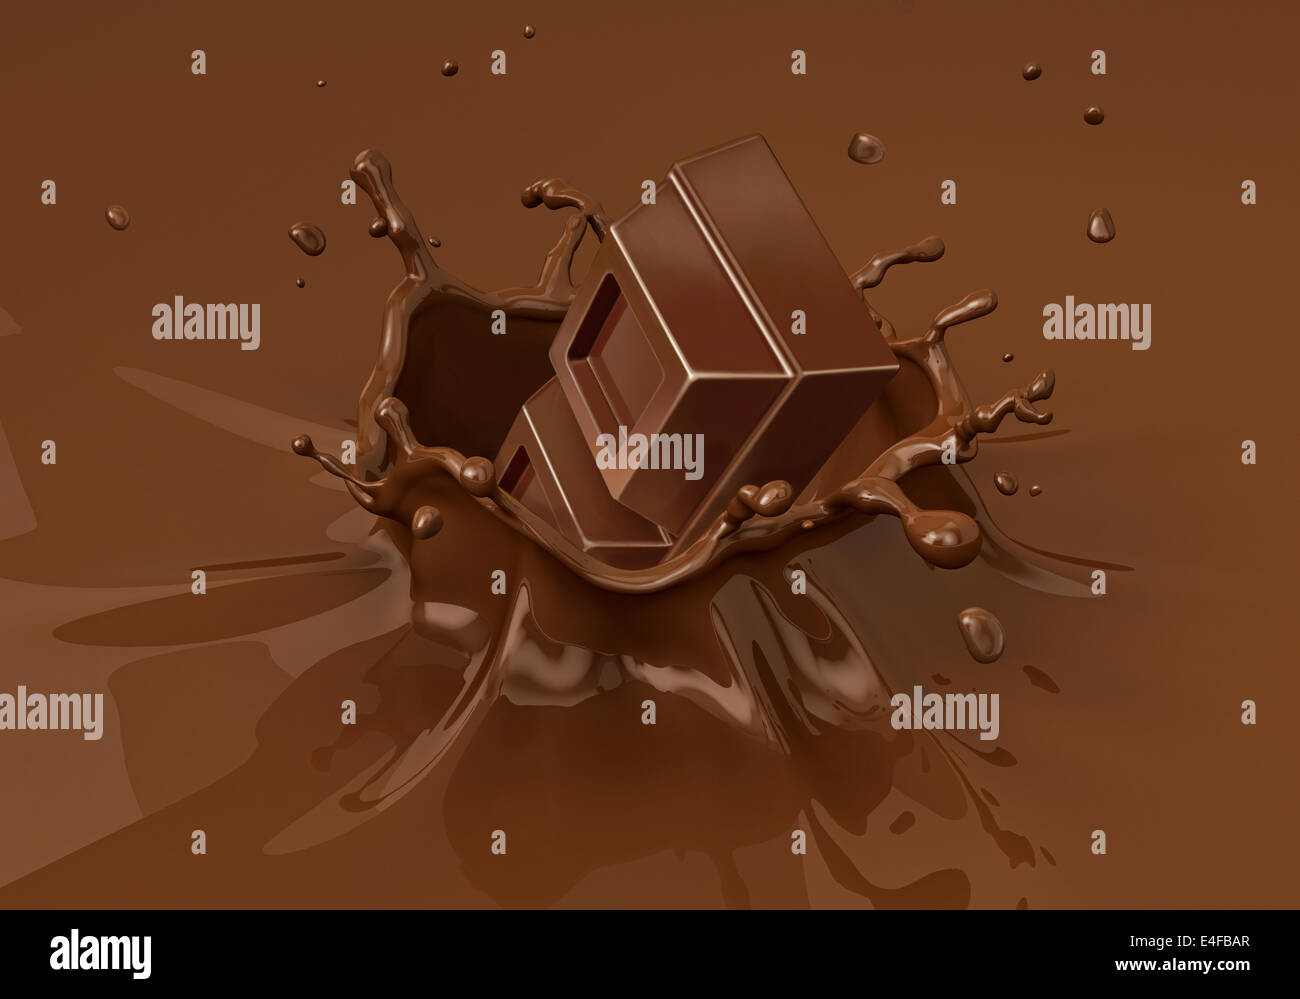 Chocolate blocks falling into liquid chocolate splashing.  Close up view. Stock Photo